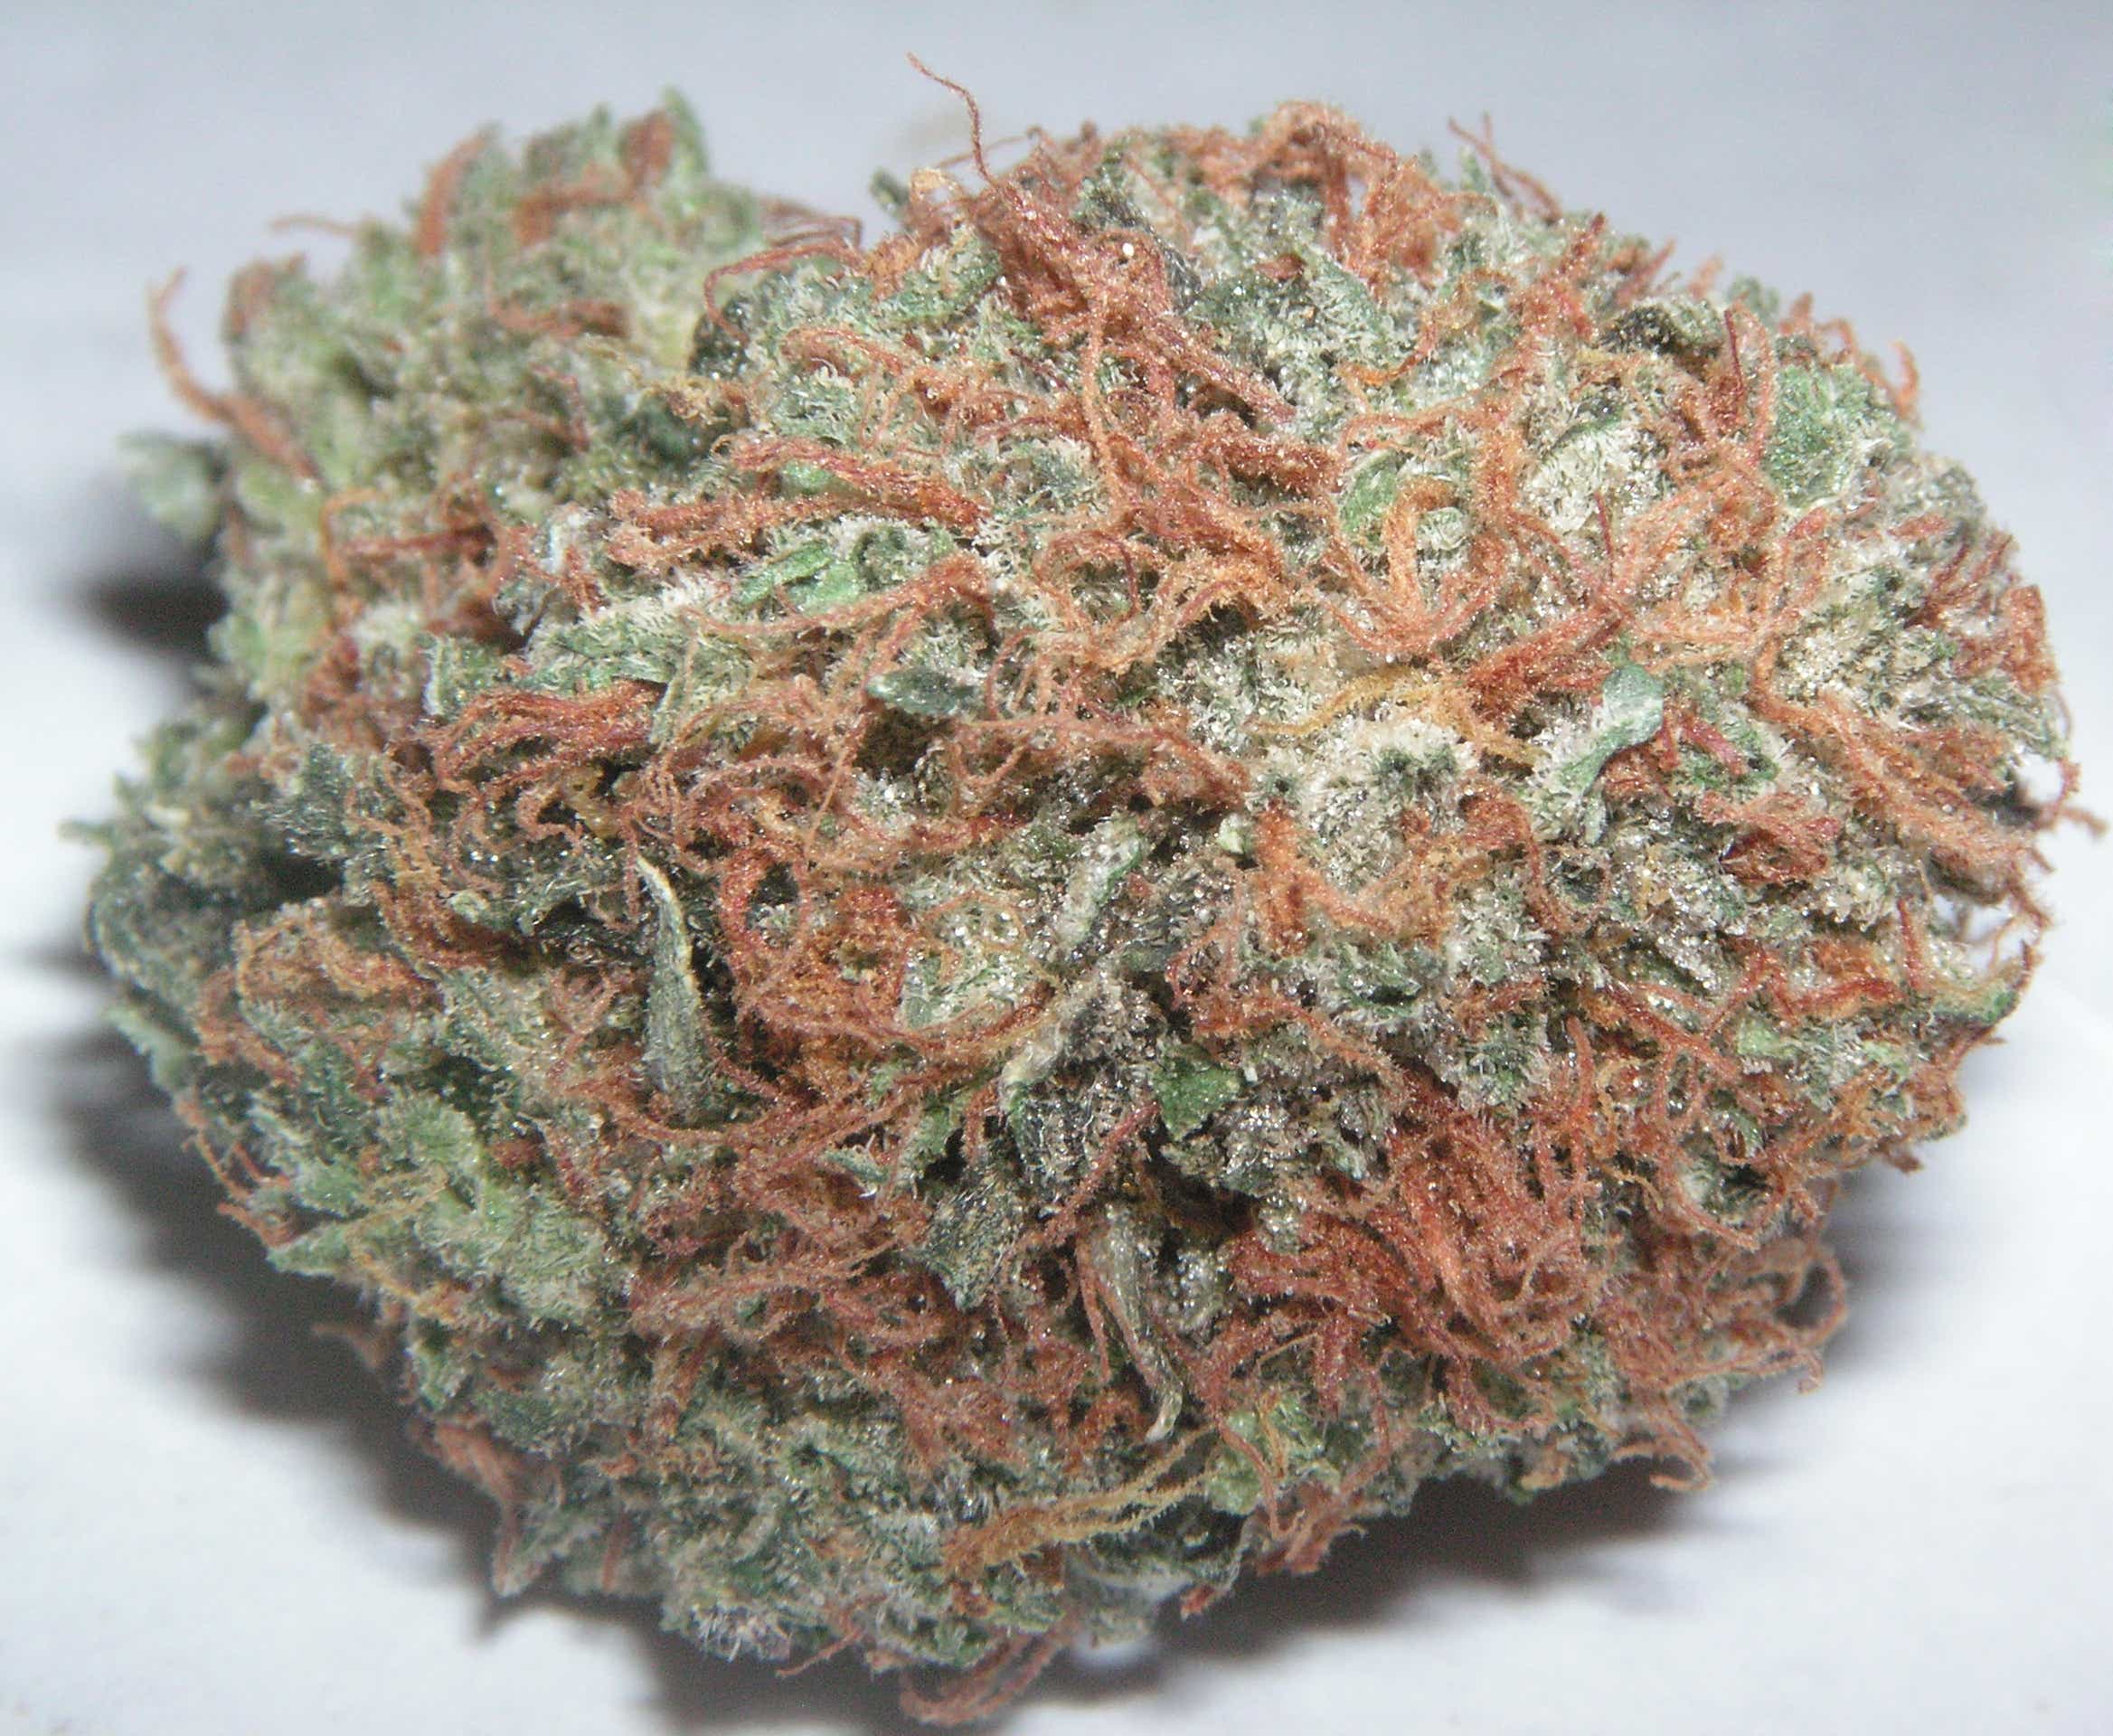 File:24 grams of cannabis buds and digital scale.jpg - Wikimedia